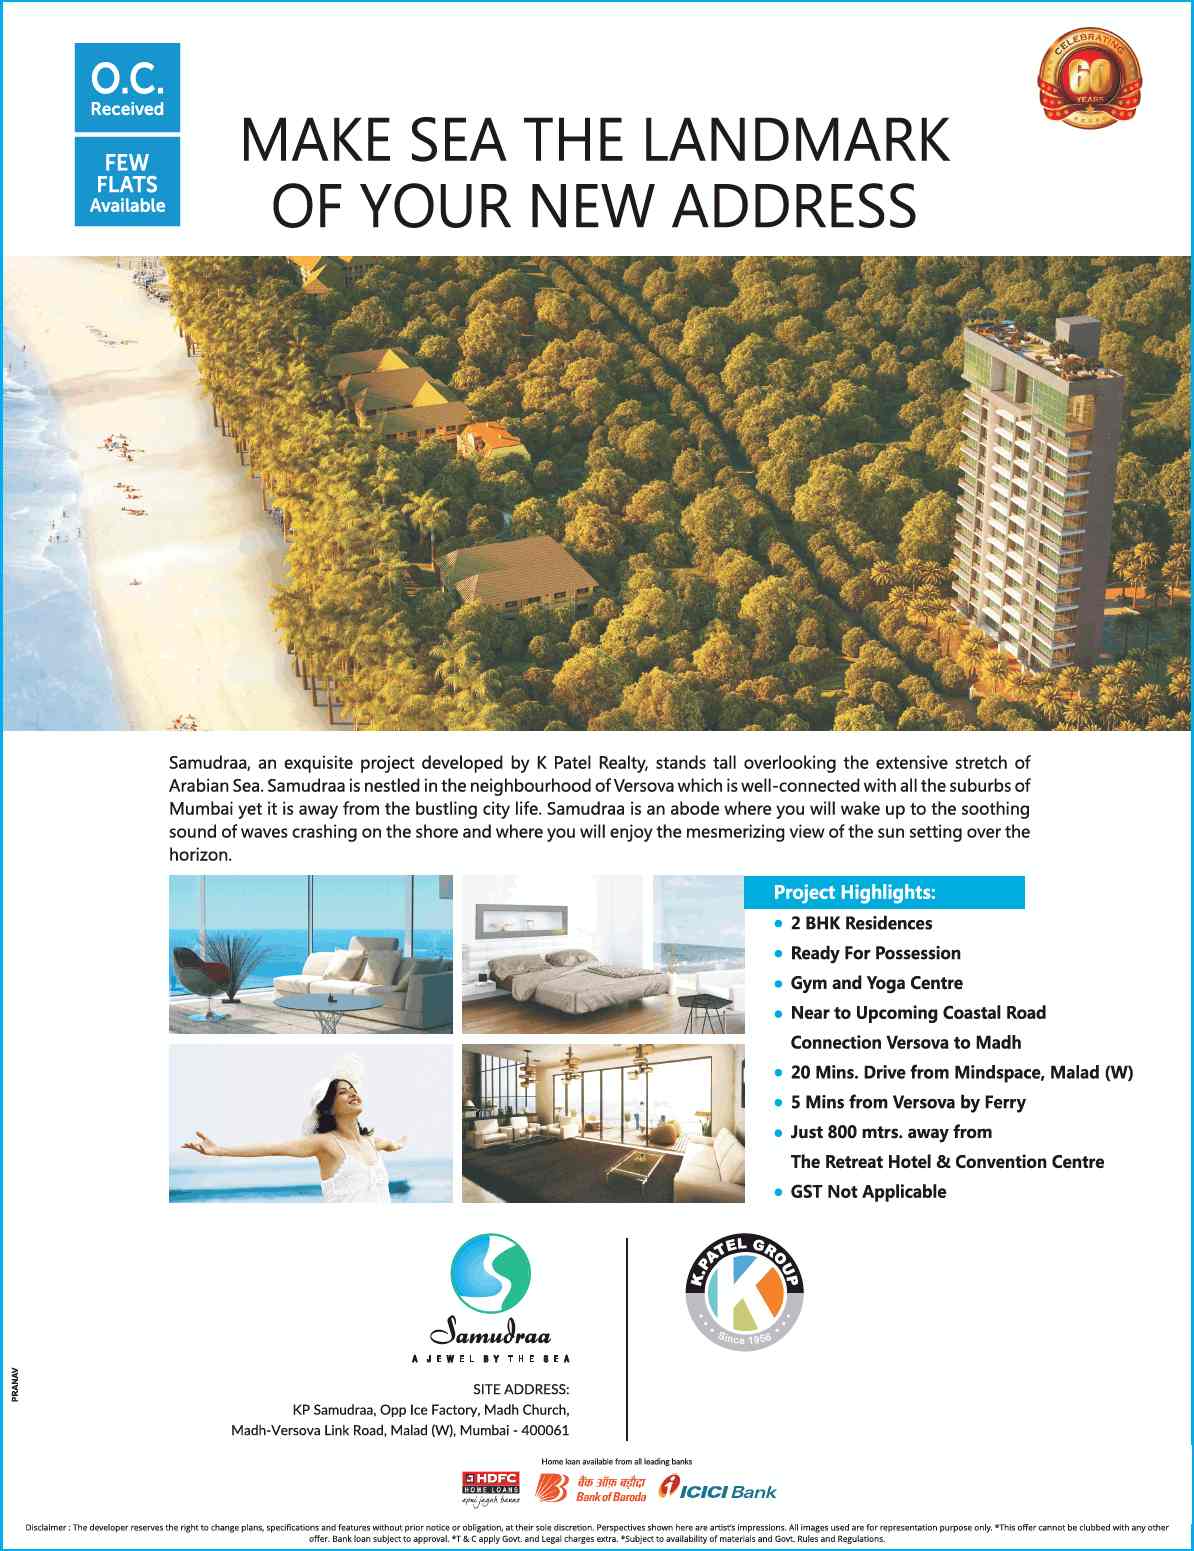 Book your abode at K Patel Samudraa & make sea the landmark of your new address in Mumbai